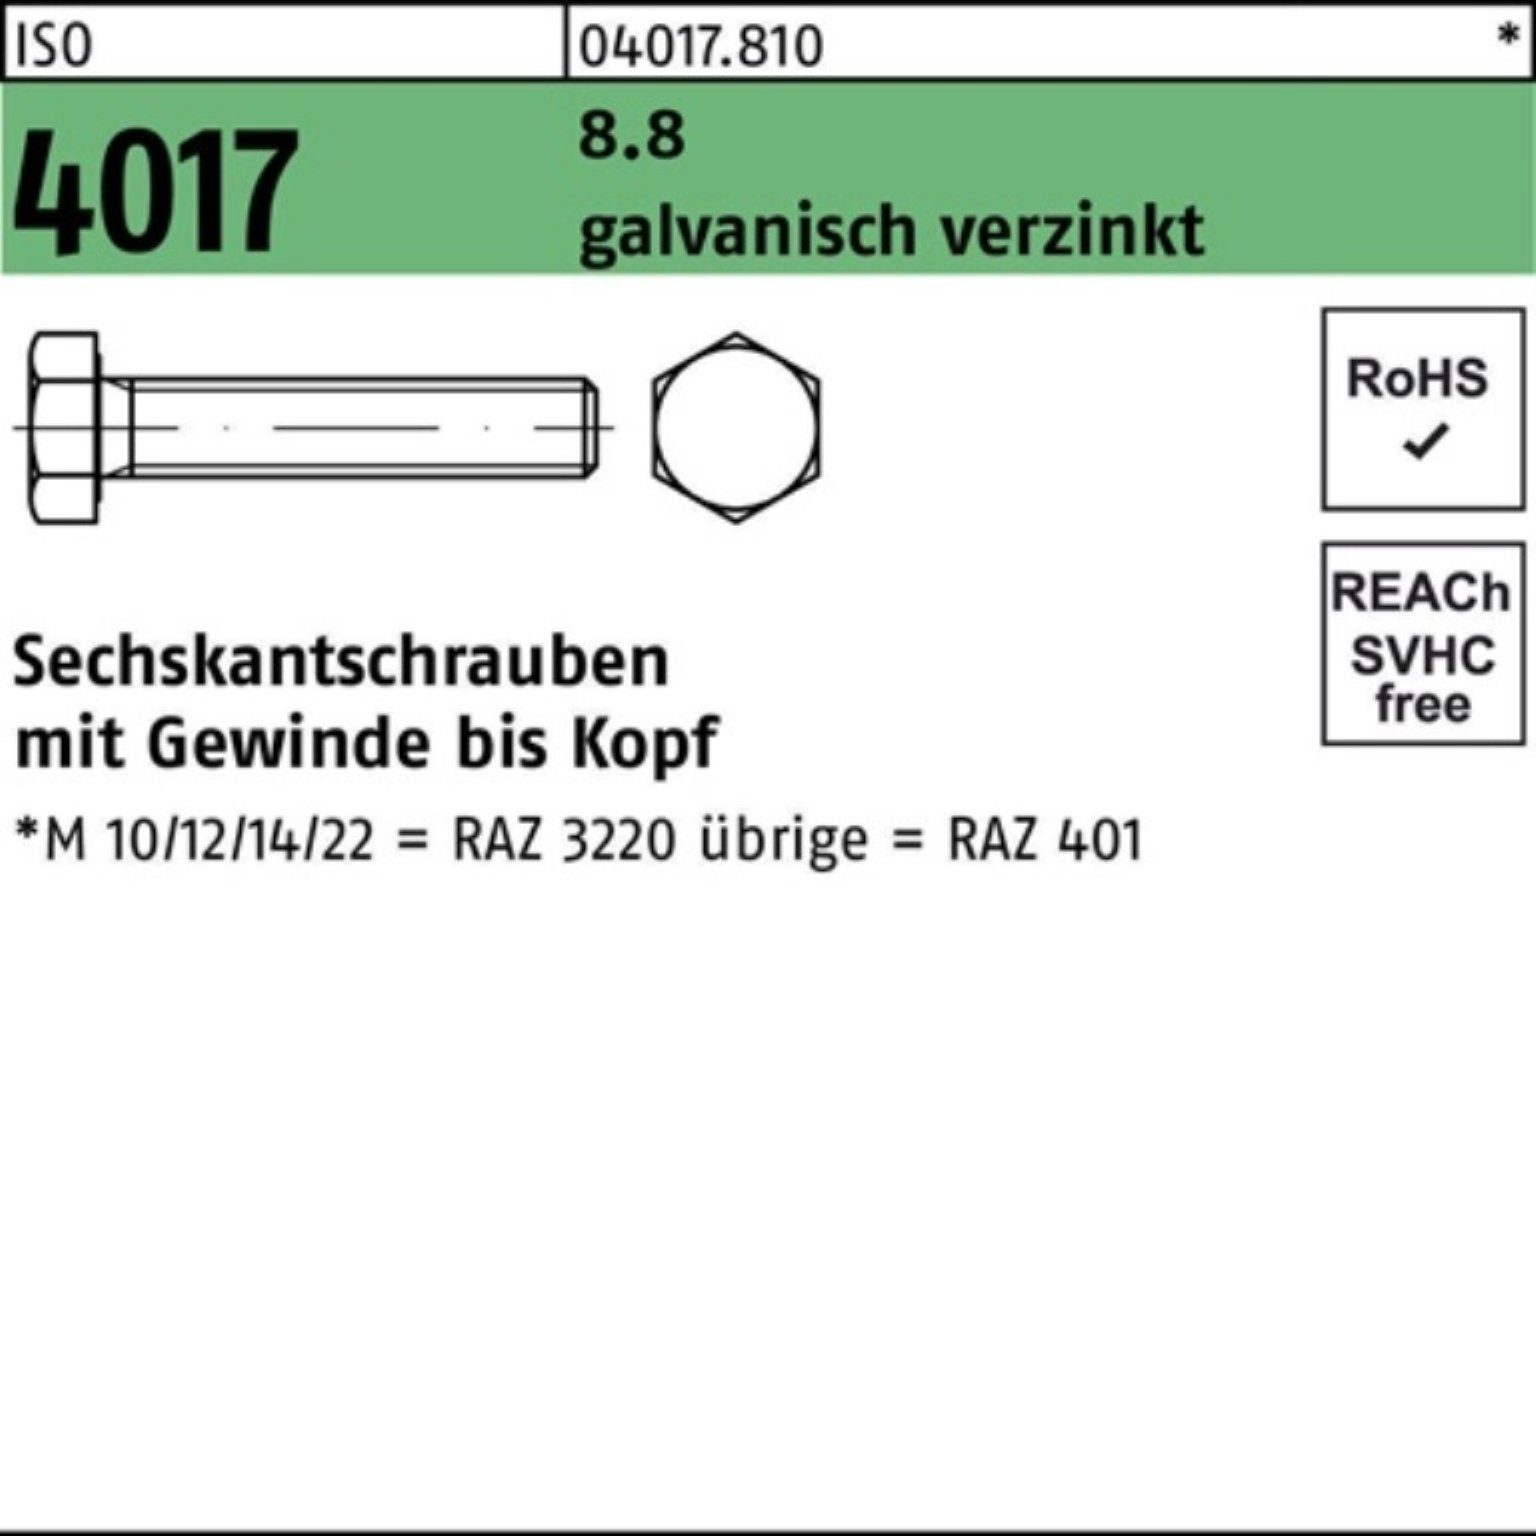 Bufab Sechskantschraube 100er Pack Sechskantschraube 1 4017 VG Stü 75 galv.verz. ISO 8.8 M33x